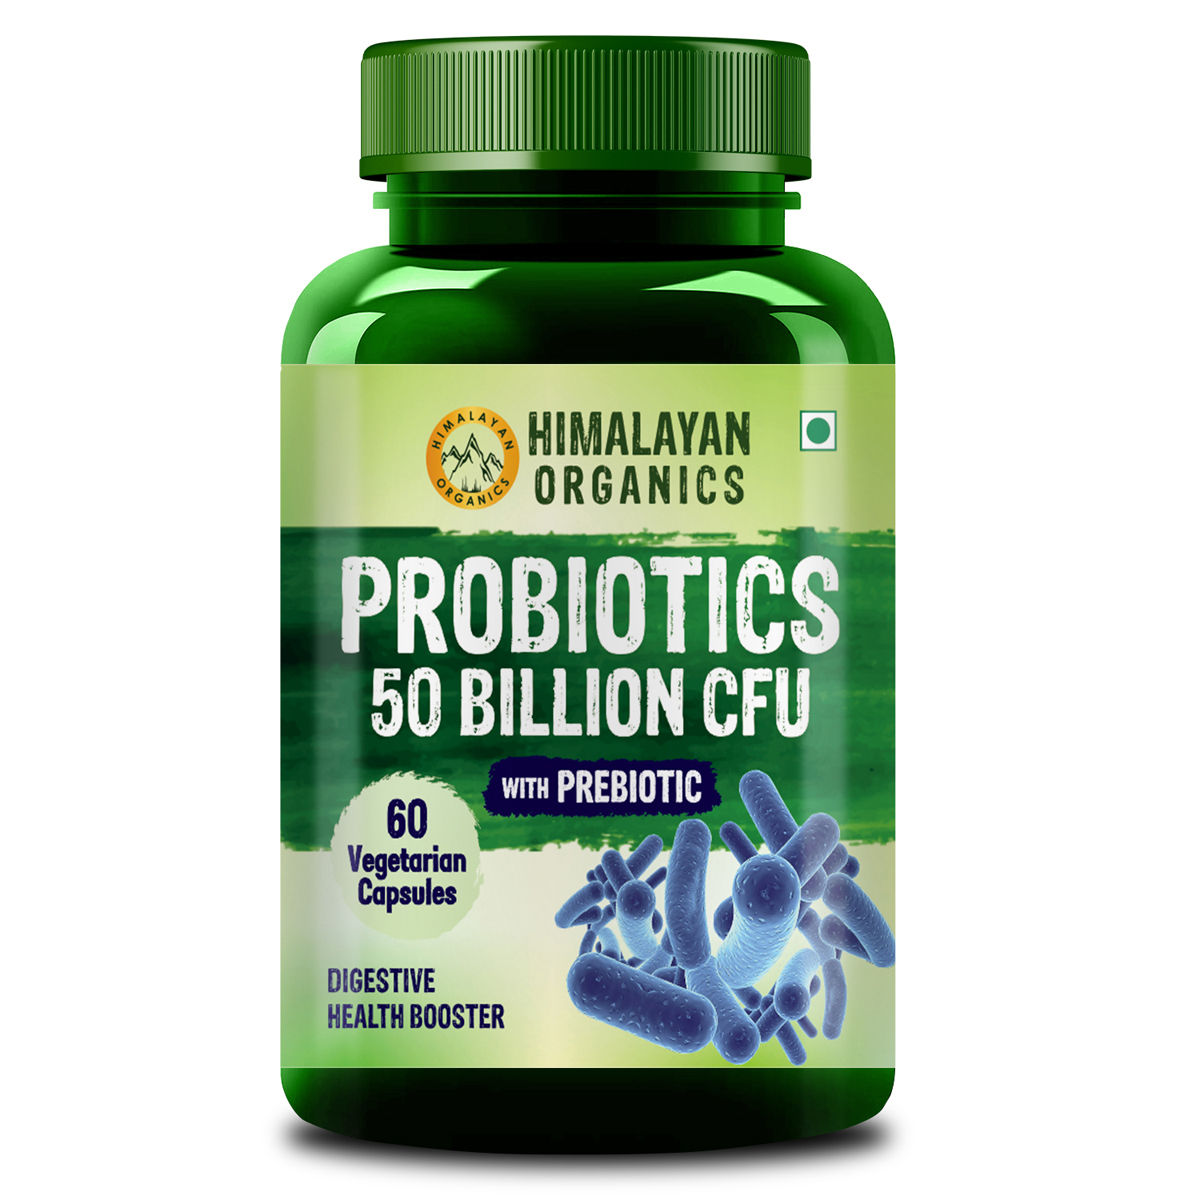 Buy Himalayan Organics Probiotics 50 Billion CFU, 60 Capsules Online